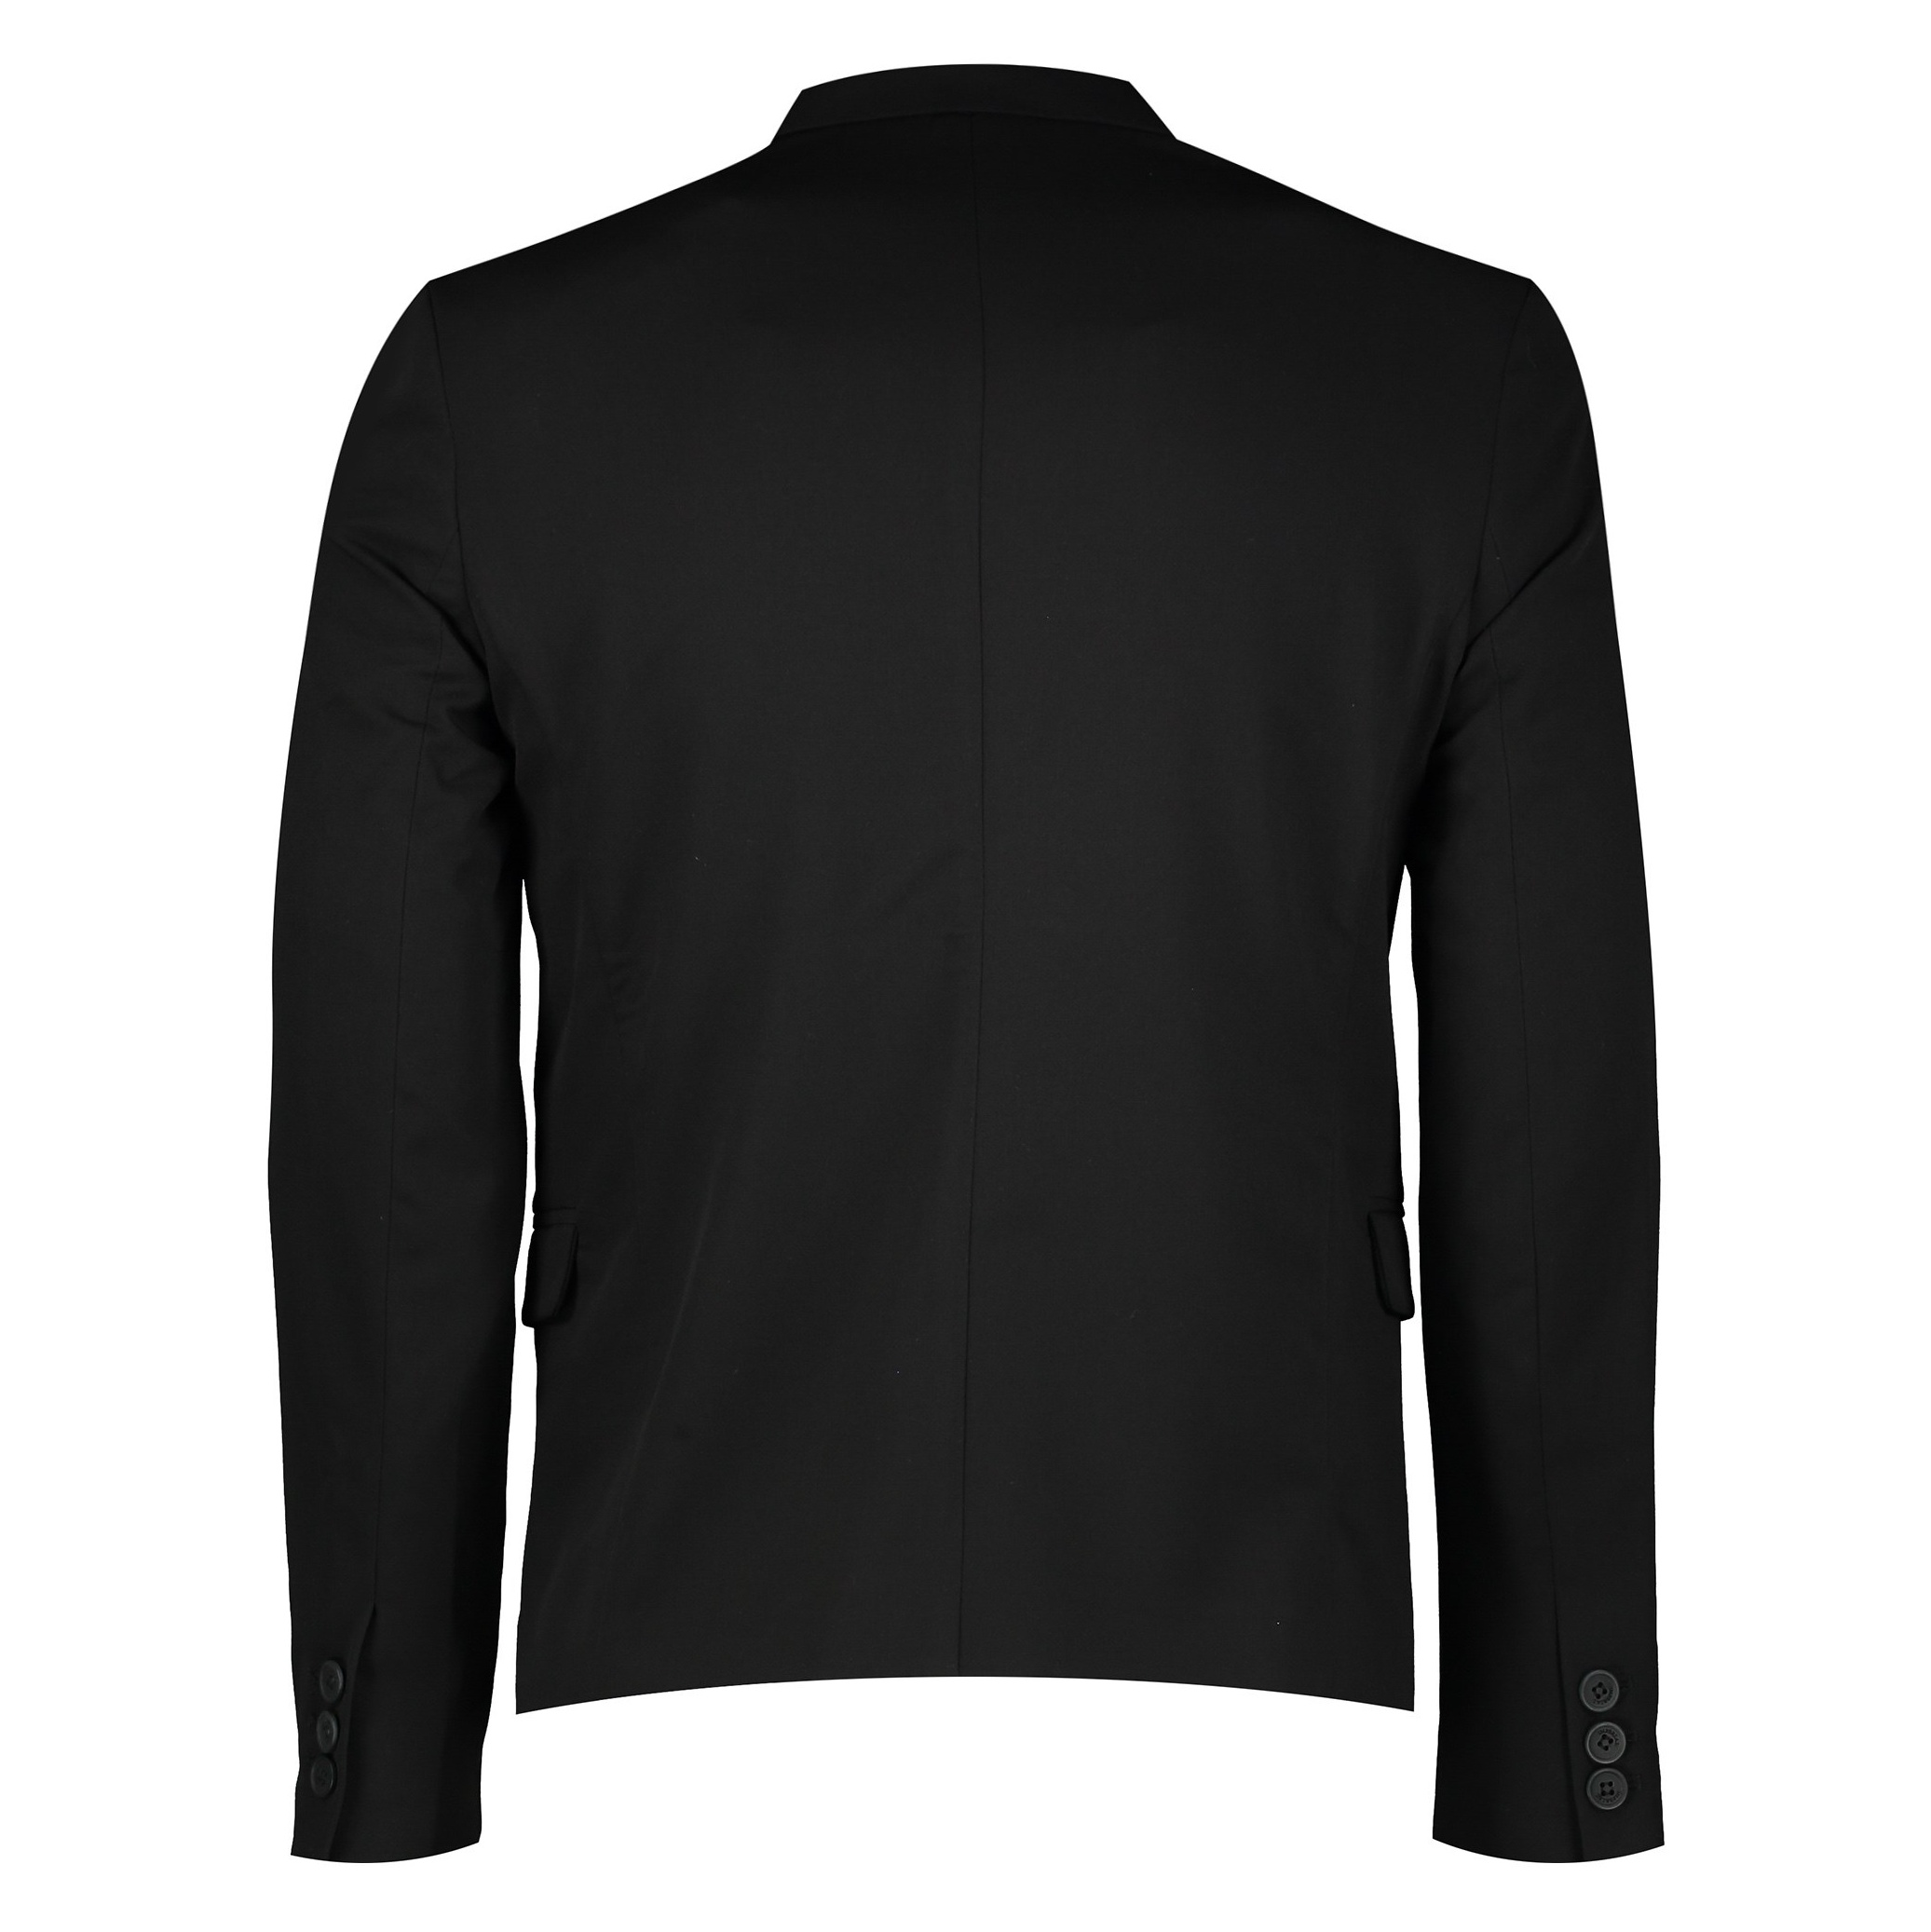 کت تک رسمی مردانه - امپریال